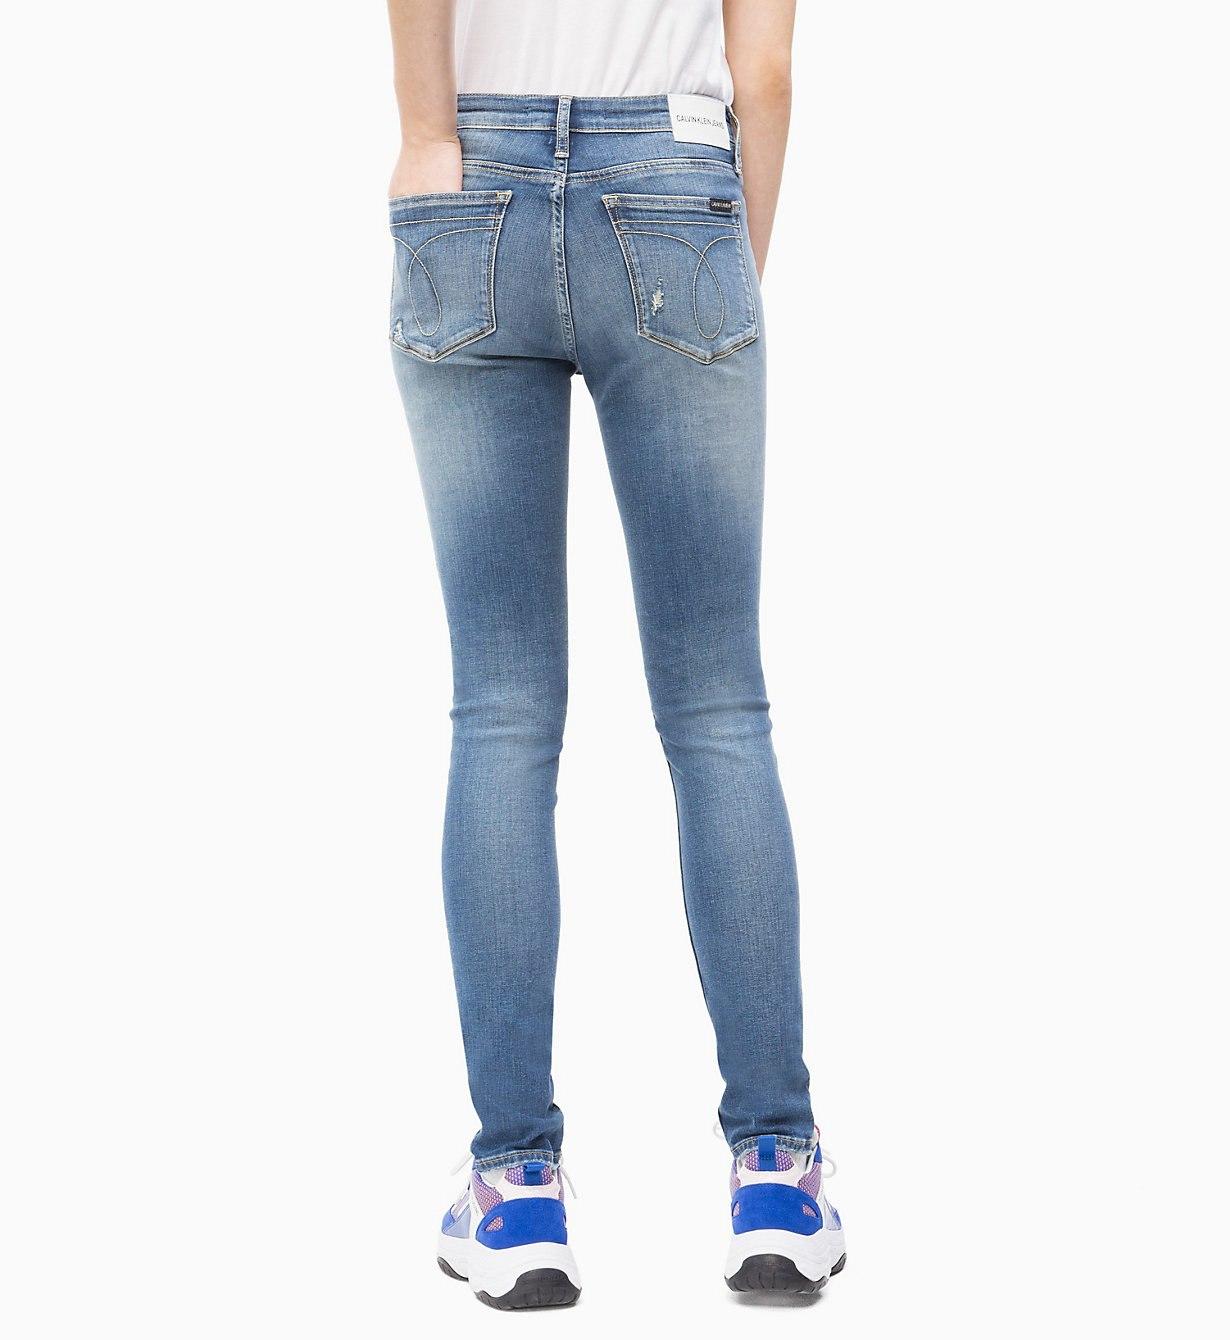 Calvin Klein Denim Ckj 011 Mid Rise Skinny Jeans in Denim (Blue) - Lyst